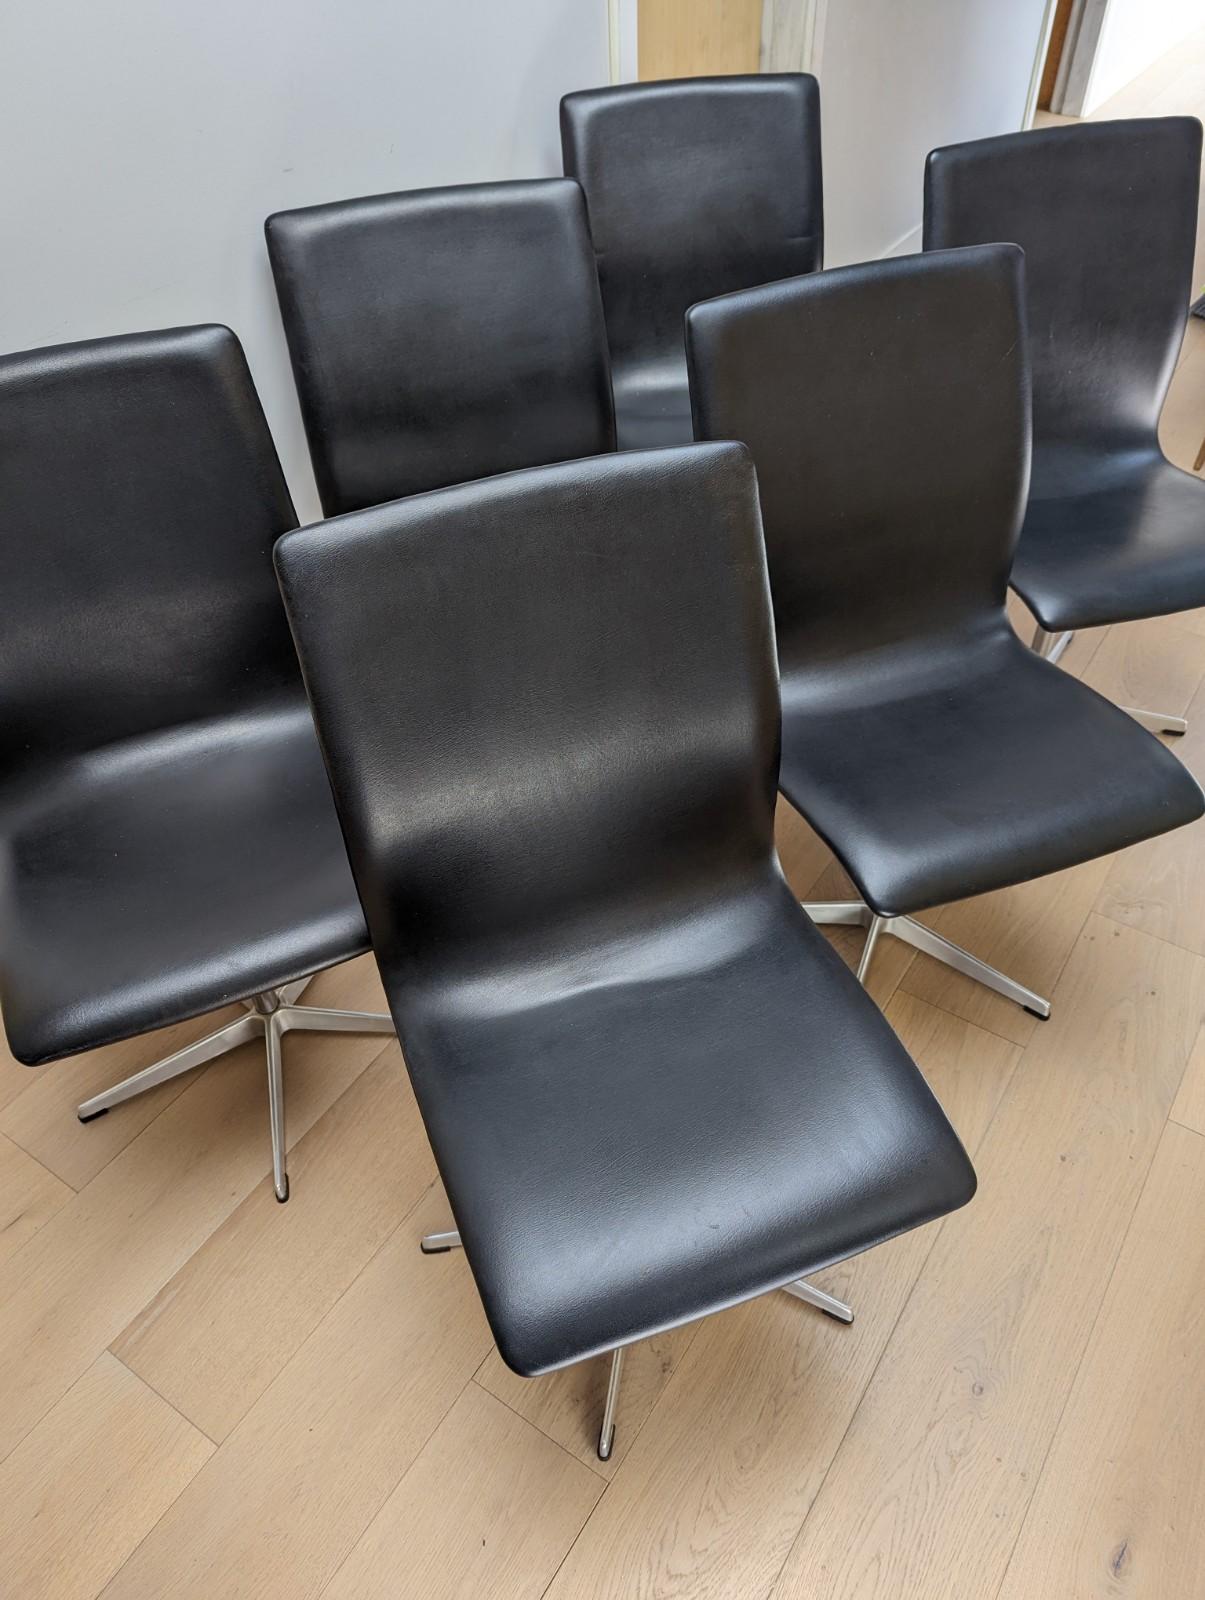 4 x Arne Jacobsen Oxford Chairs by Fritz Hansen, Black Vinyl and Aluminium Legs For Sale 3